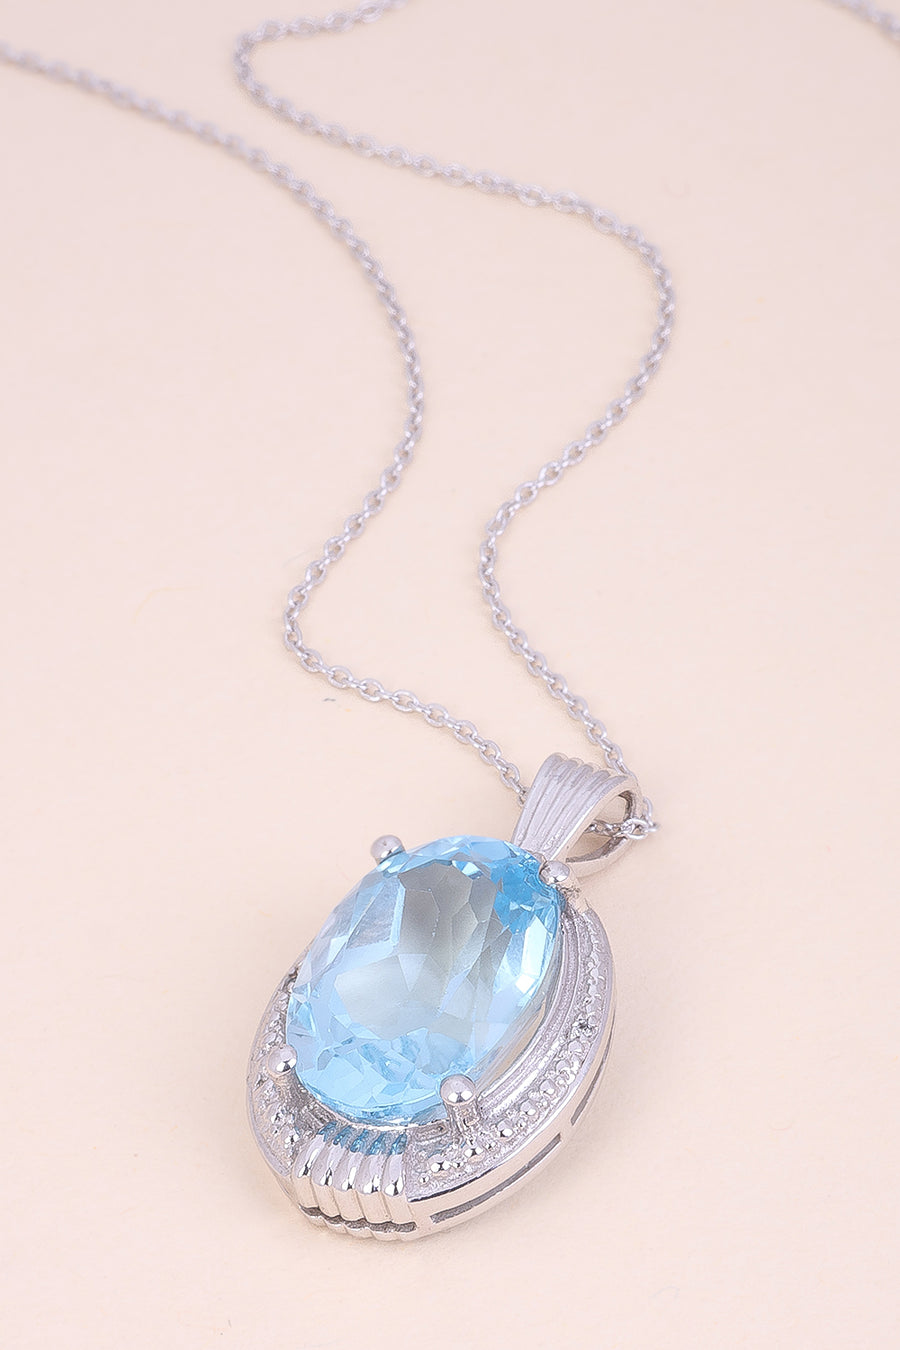 Blue & White Topaz Silver Necklace Pendant Chain-Avishya